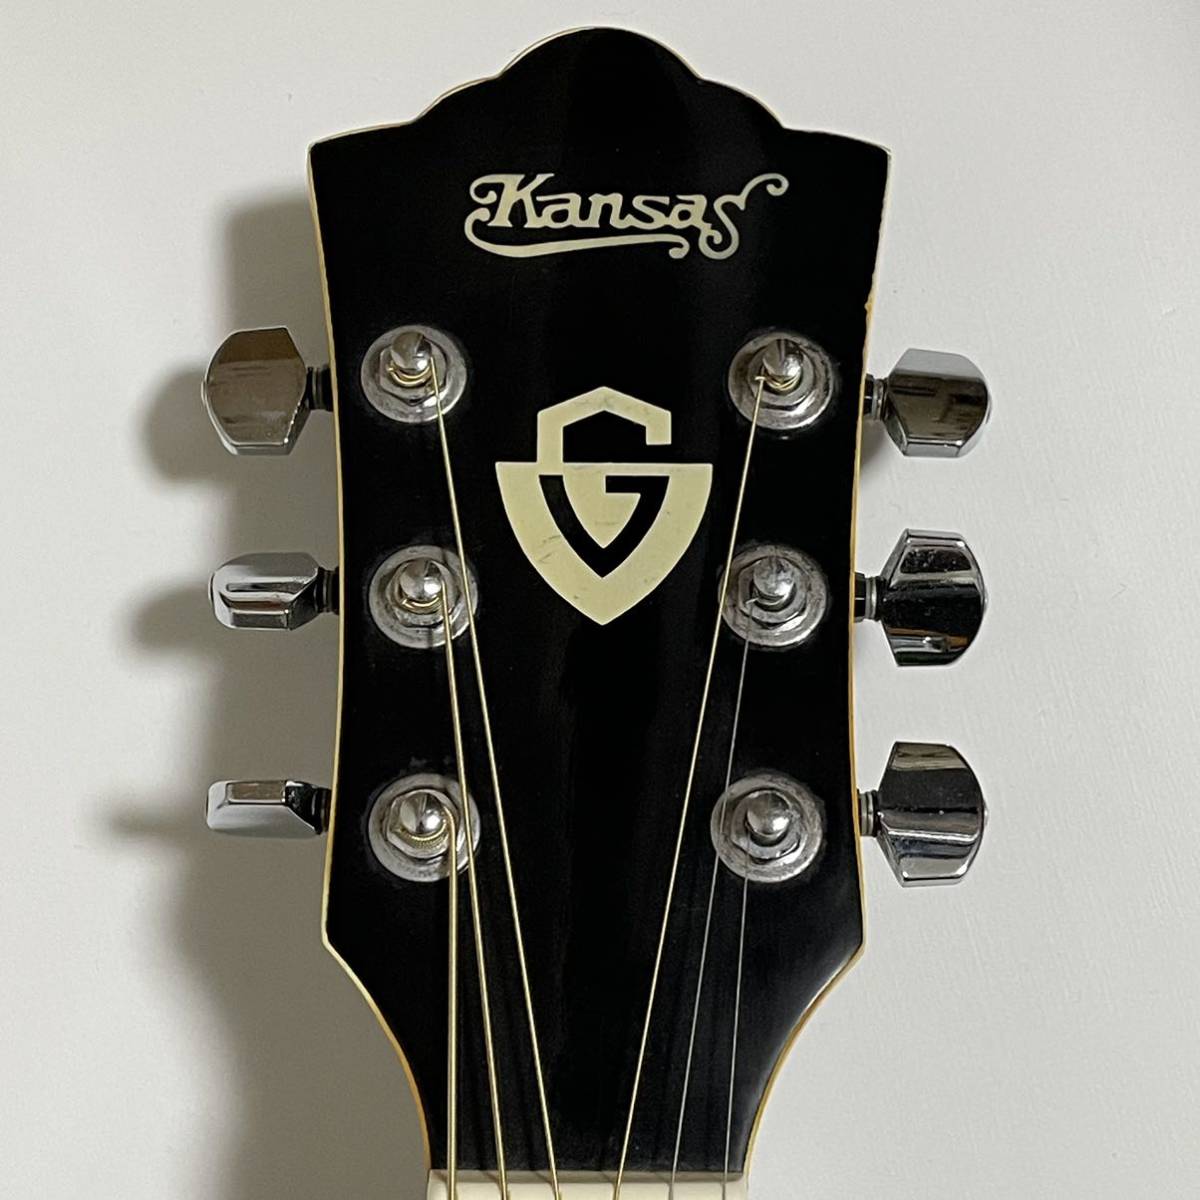 KANSAS GUITAR KW-250 アコースティックギター (キワヤ/鈴木バイオリン/木曽鈴木/カンサス/アコギ/ジャパンヴィンテージ)